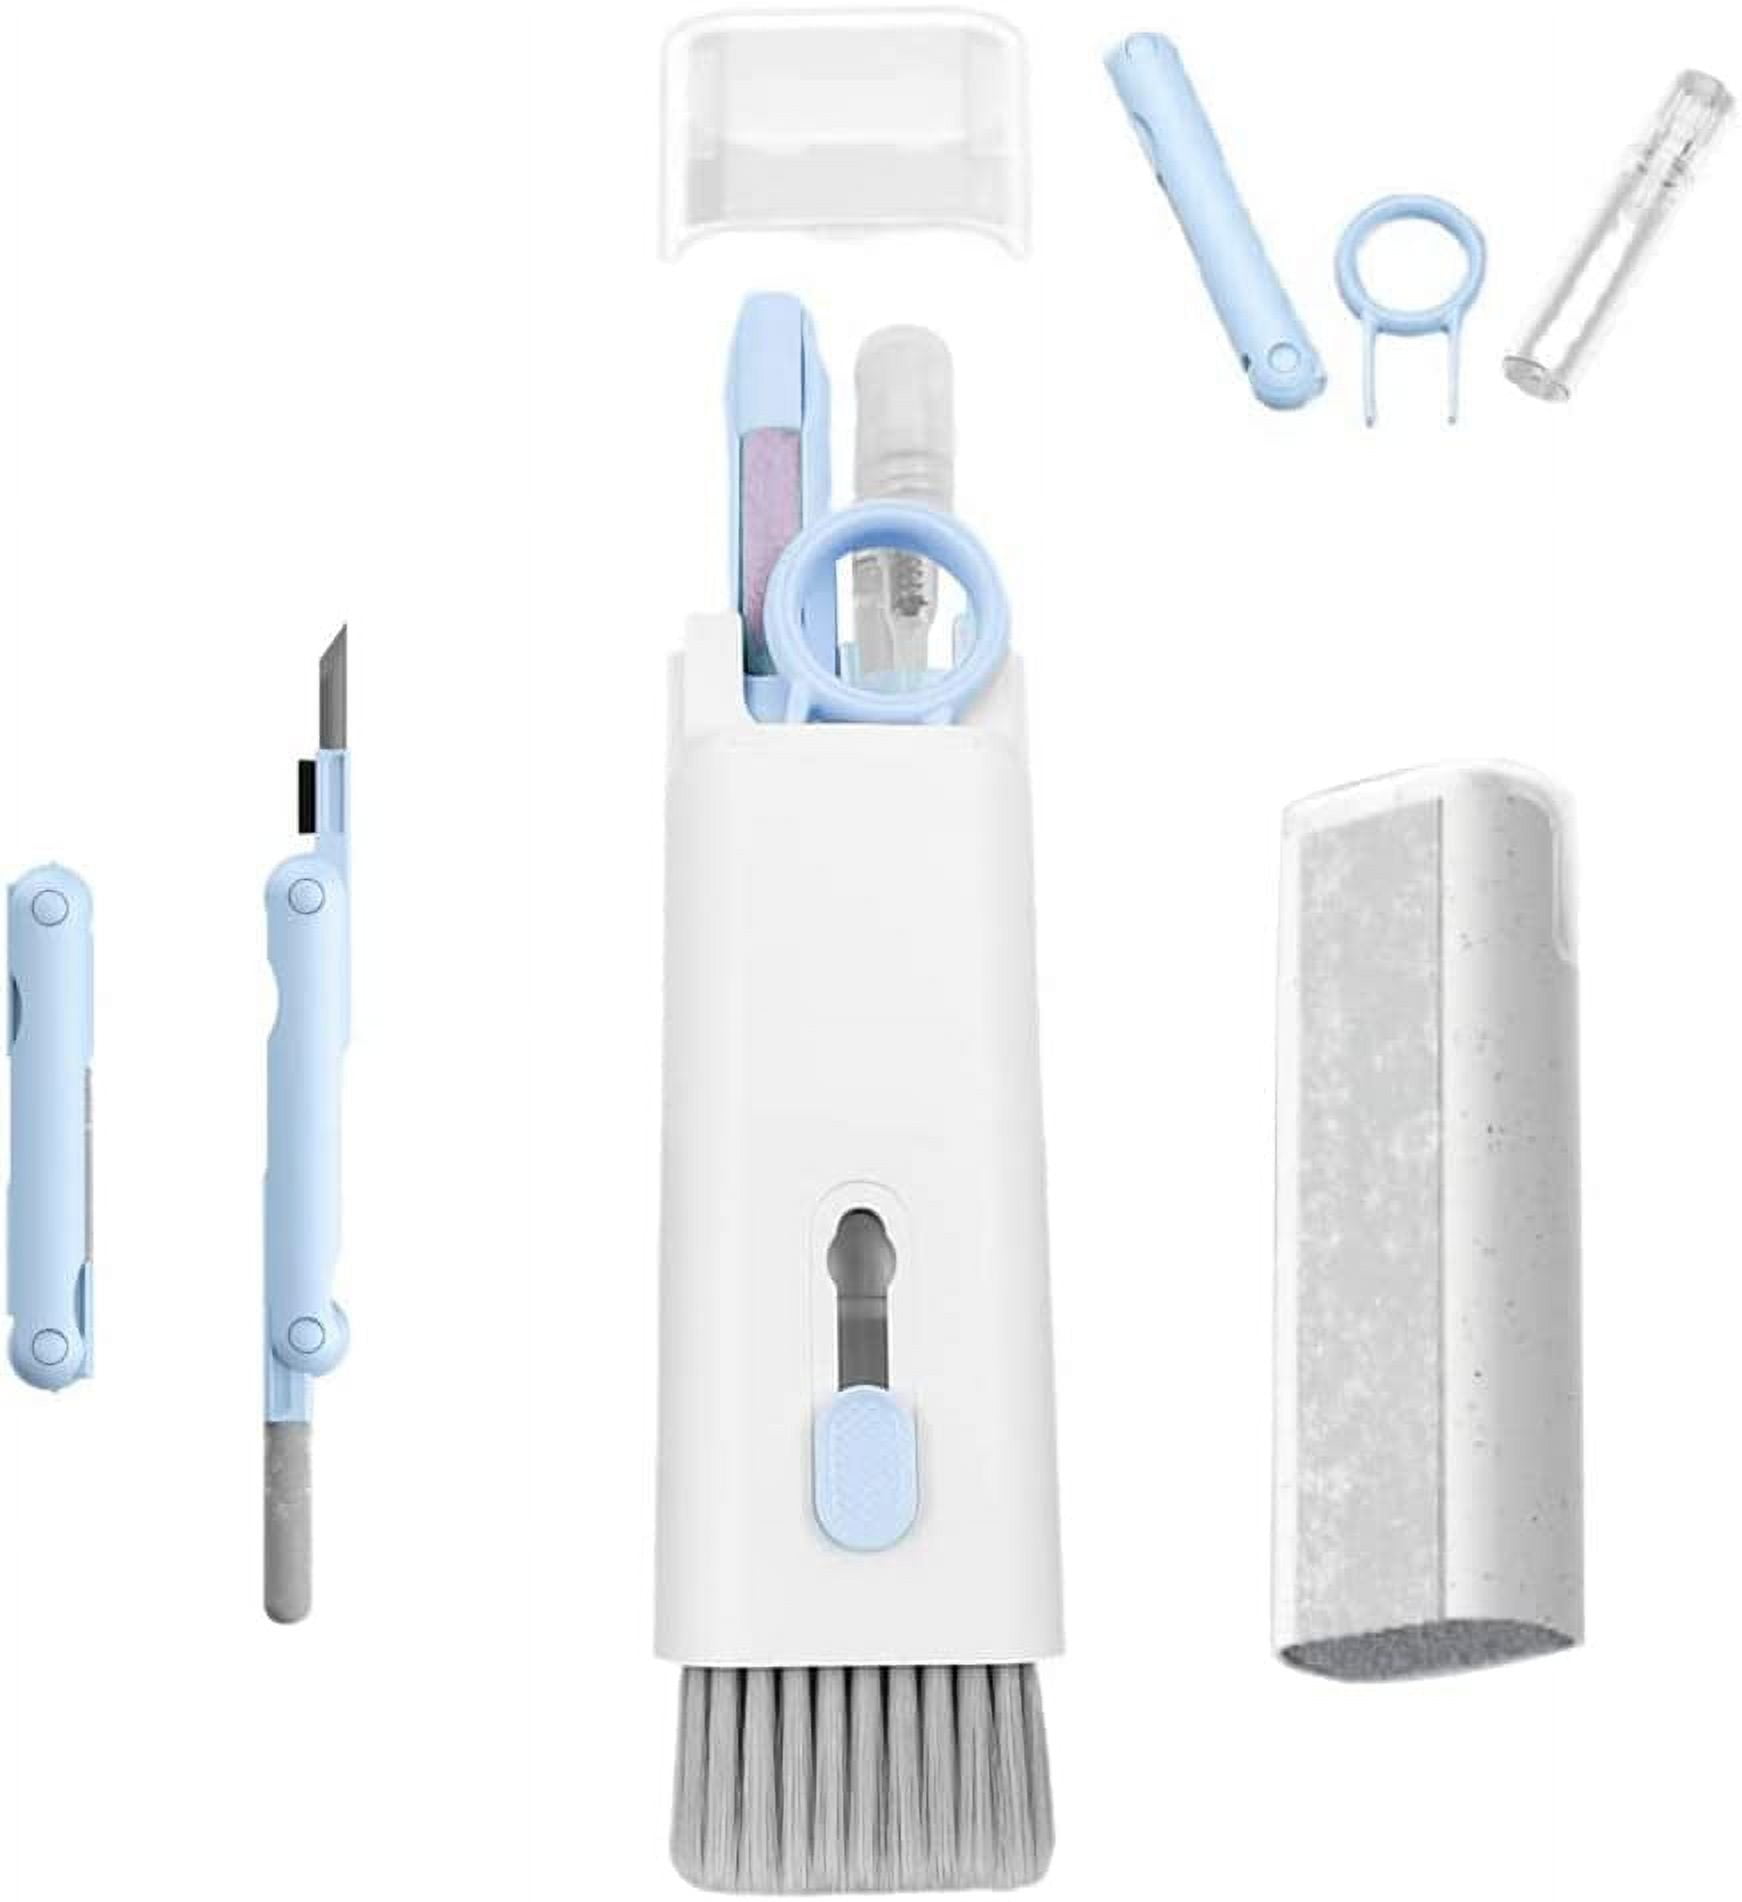 7-in-1 Electronics Cleaner Brush Kit Blue